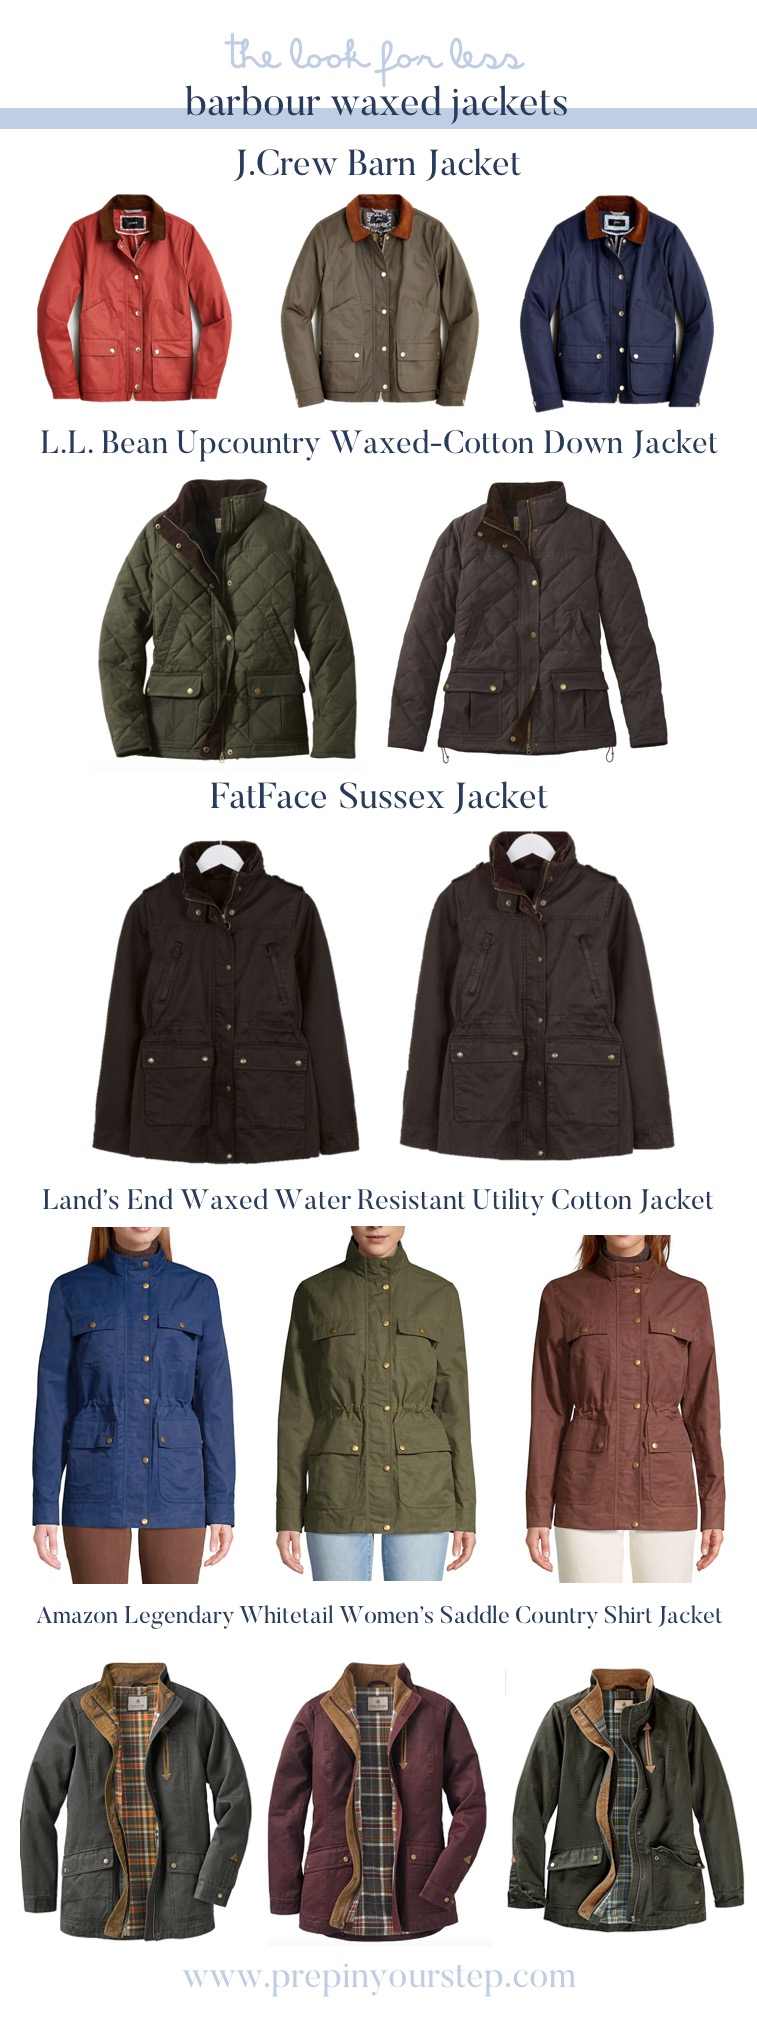 barbour jacket sales